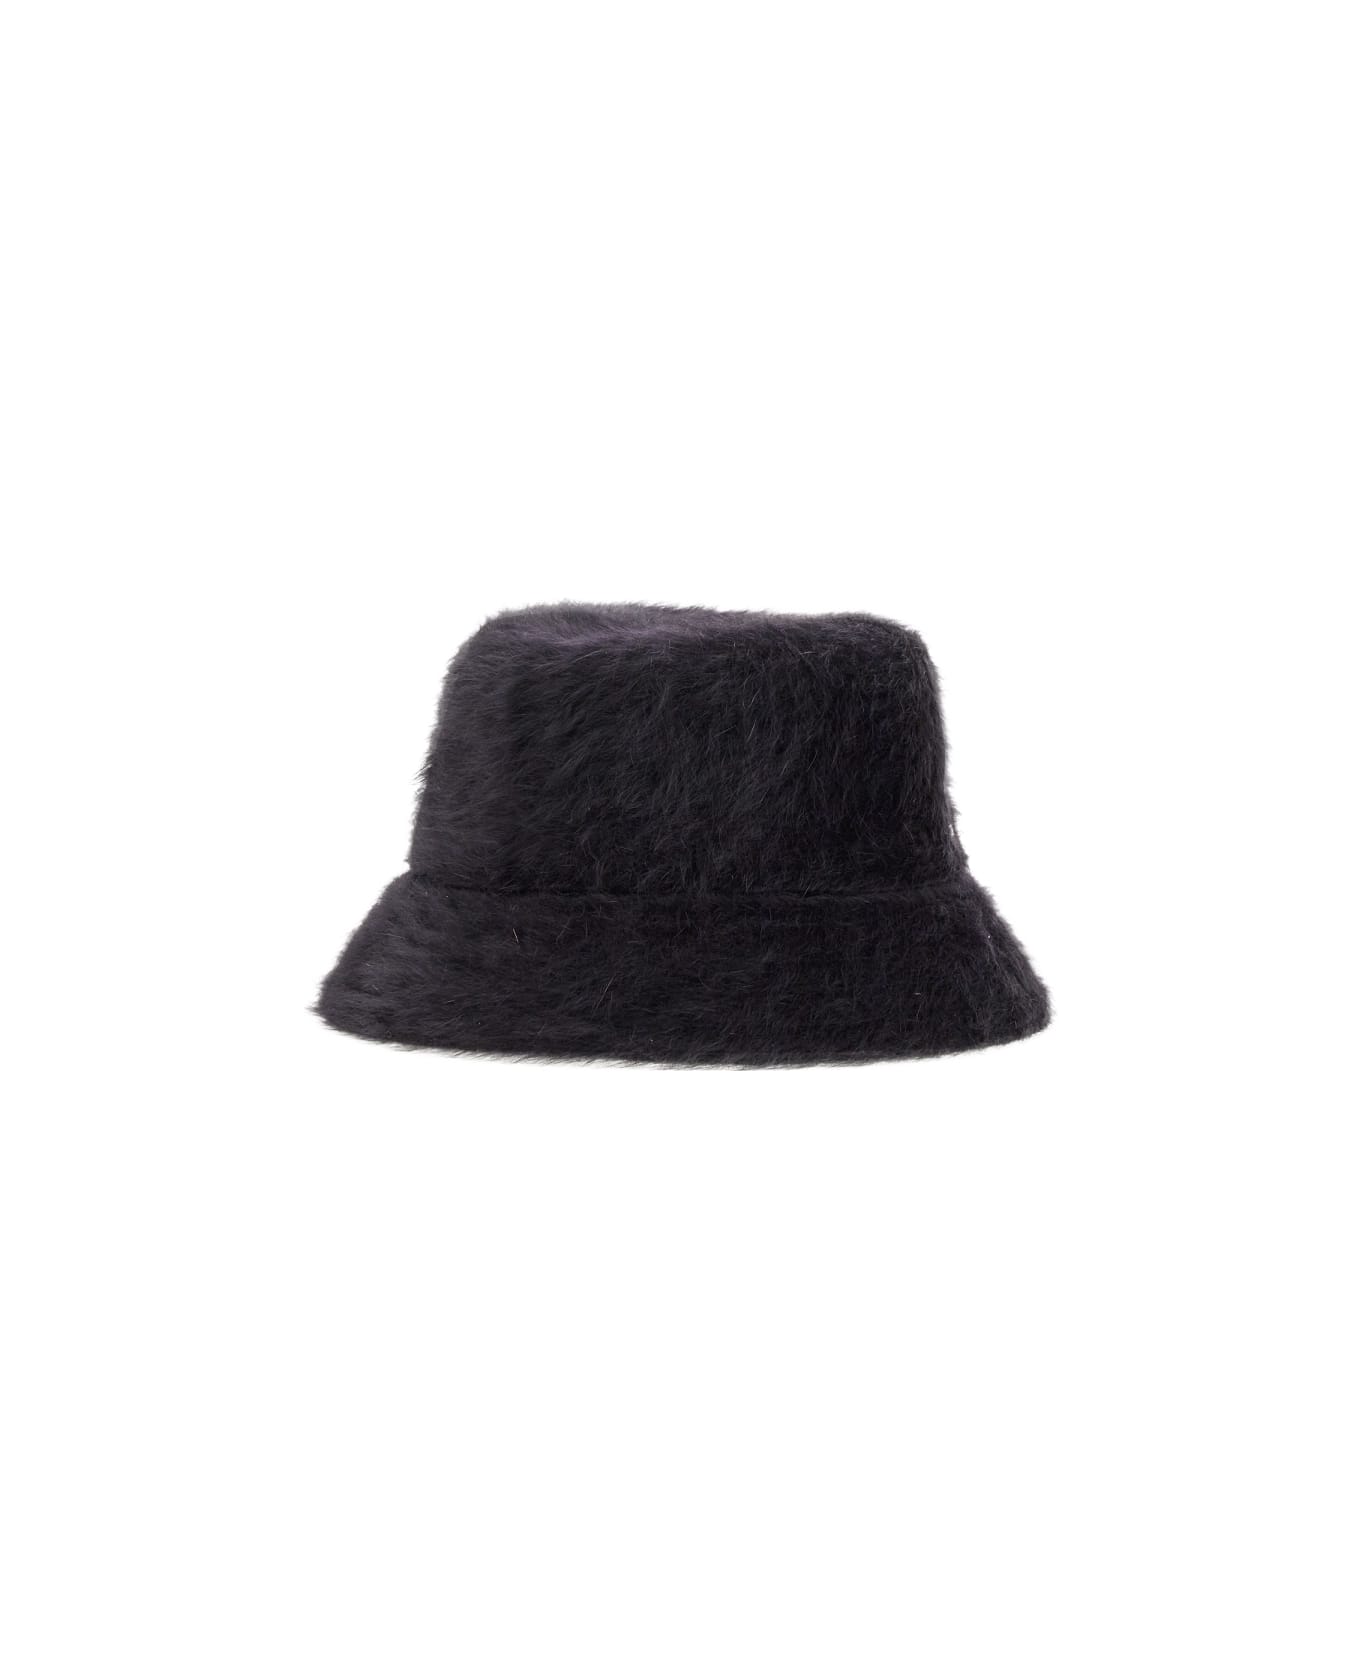 Kangol Bucket Lahinch Hat - BLACK